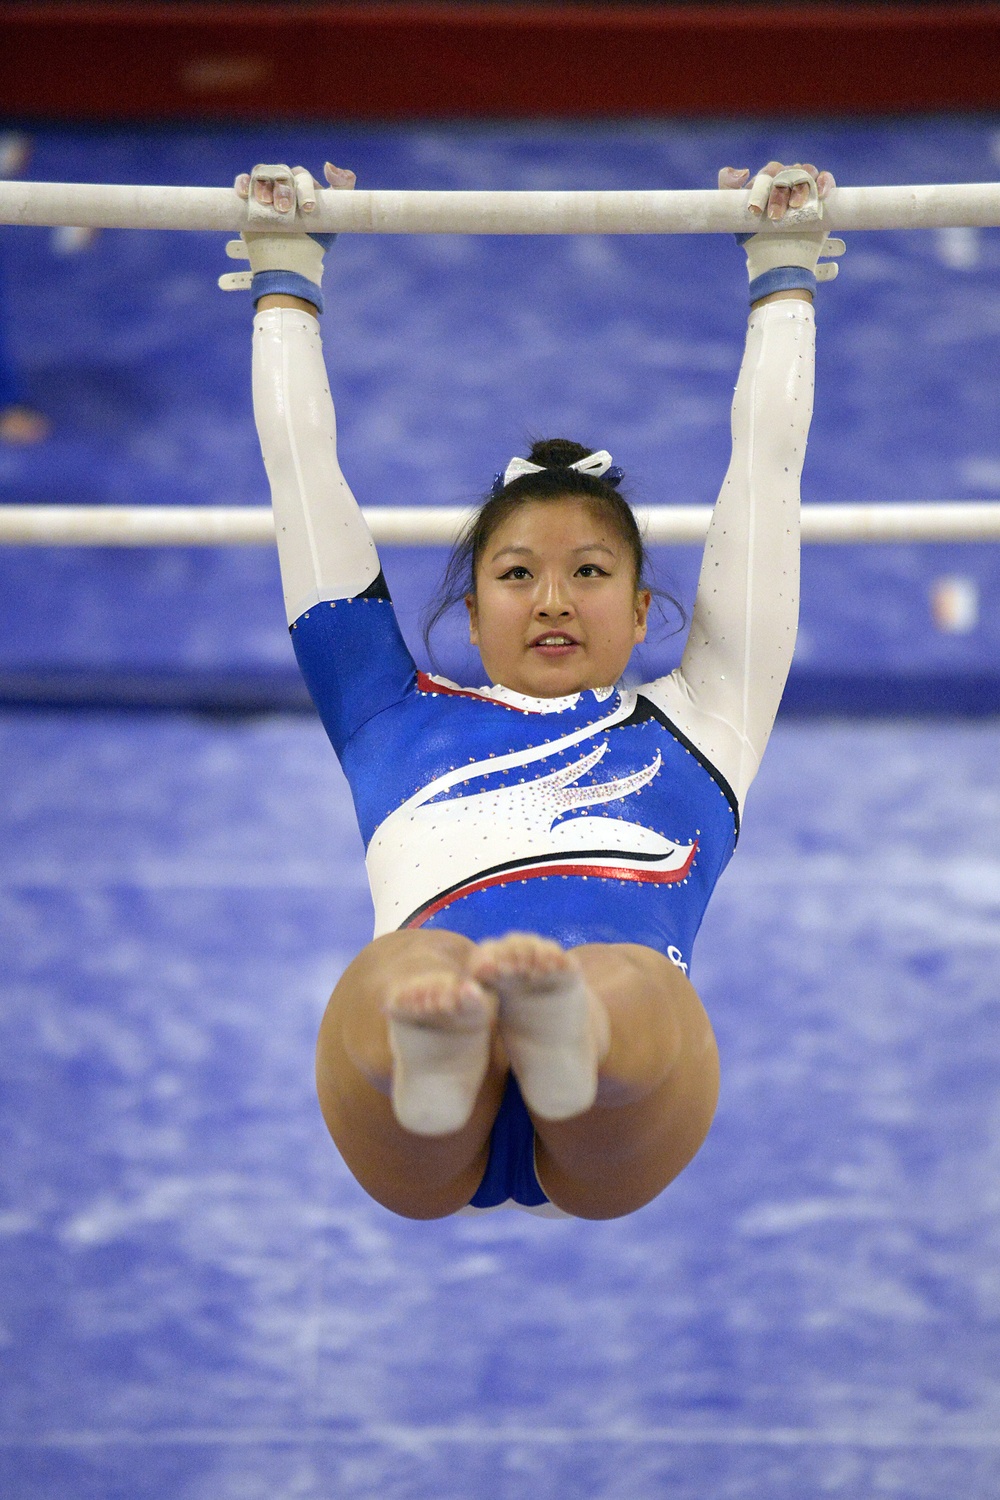 03-06-16 U.S. Air Force Academy Women's Gymnastics